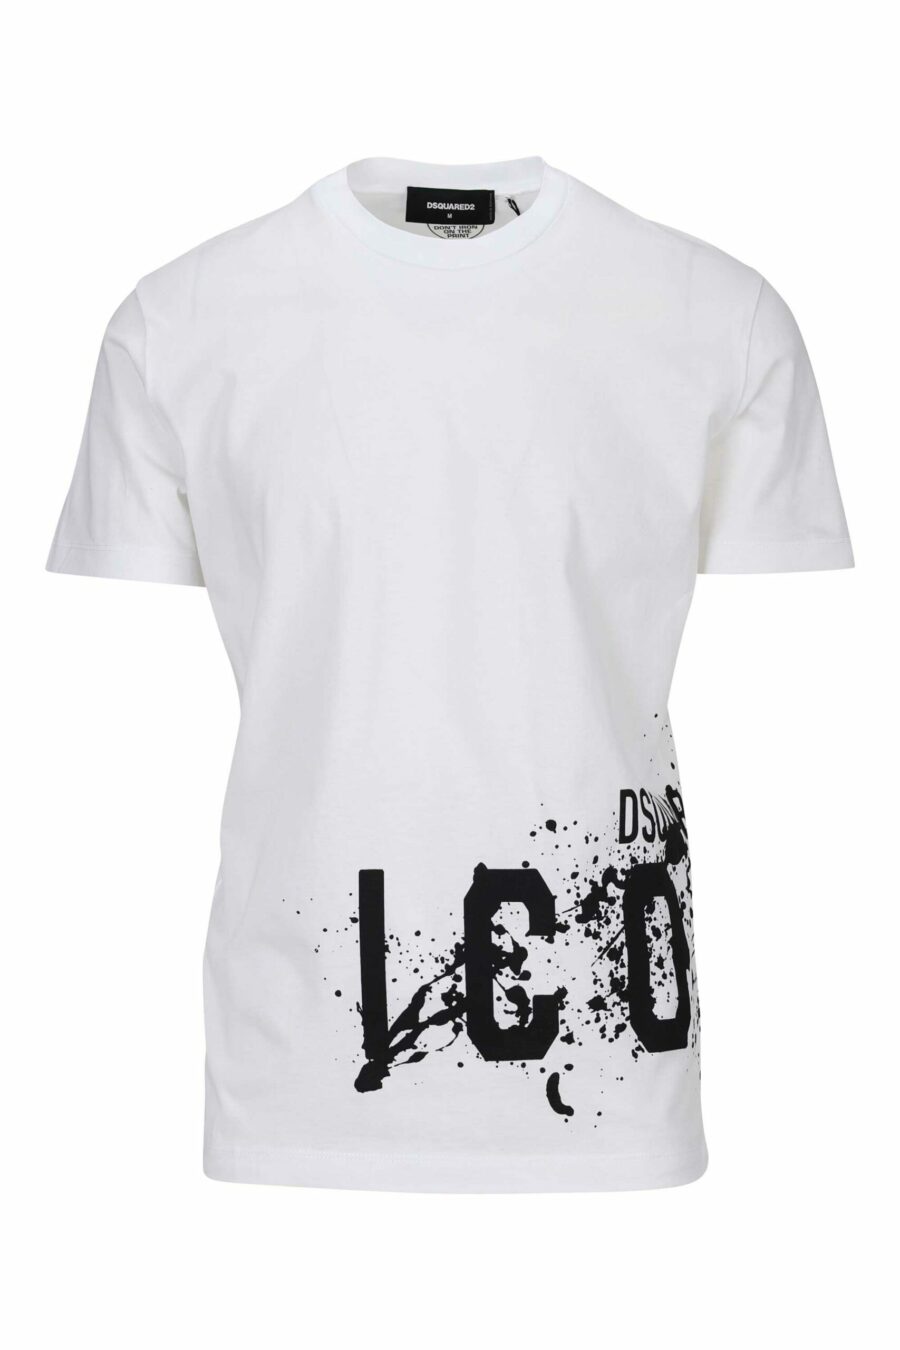 T-shirt blanc avec maxilogo "icon splash" en dessous - 8054148358549 scaled